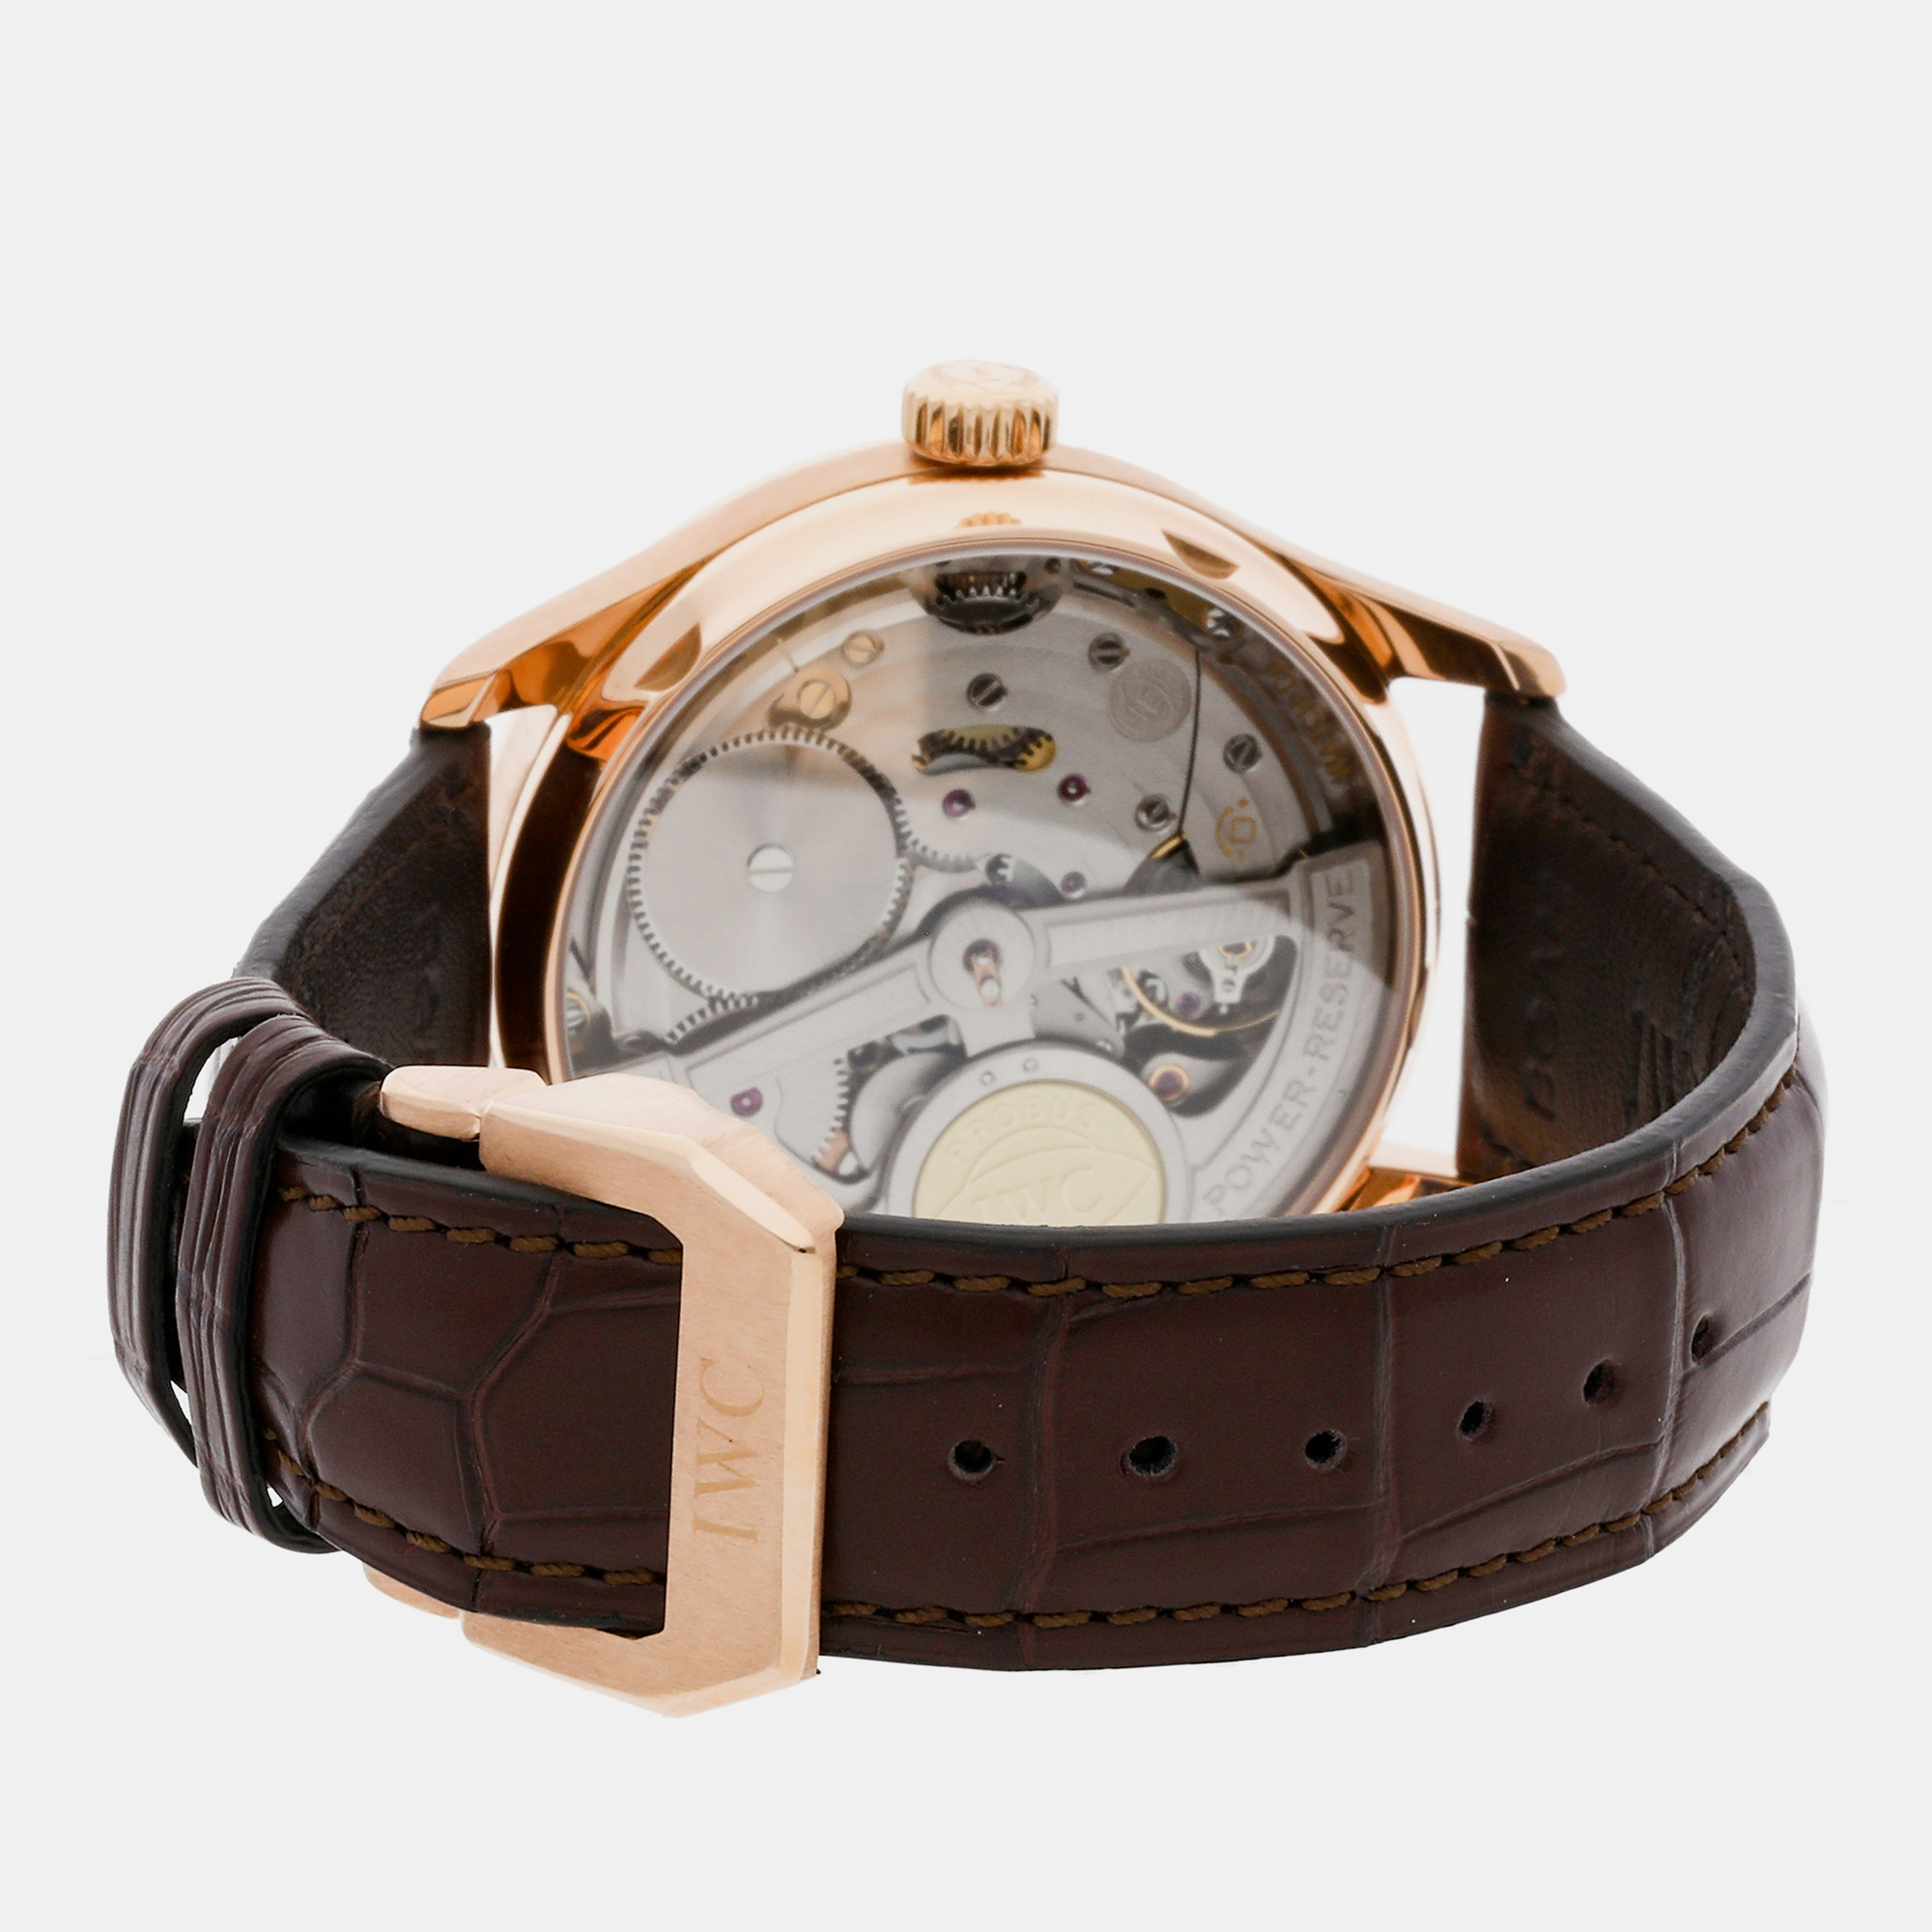 IWC Silver 18K Rose Gold Portuguese IW5001-13 Automatic Men's Wristwatch 42 Mm